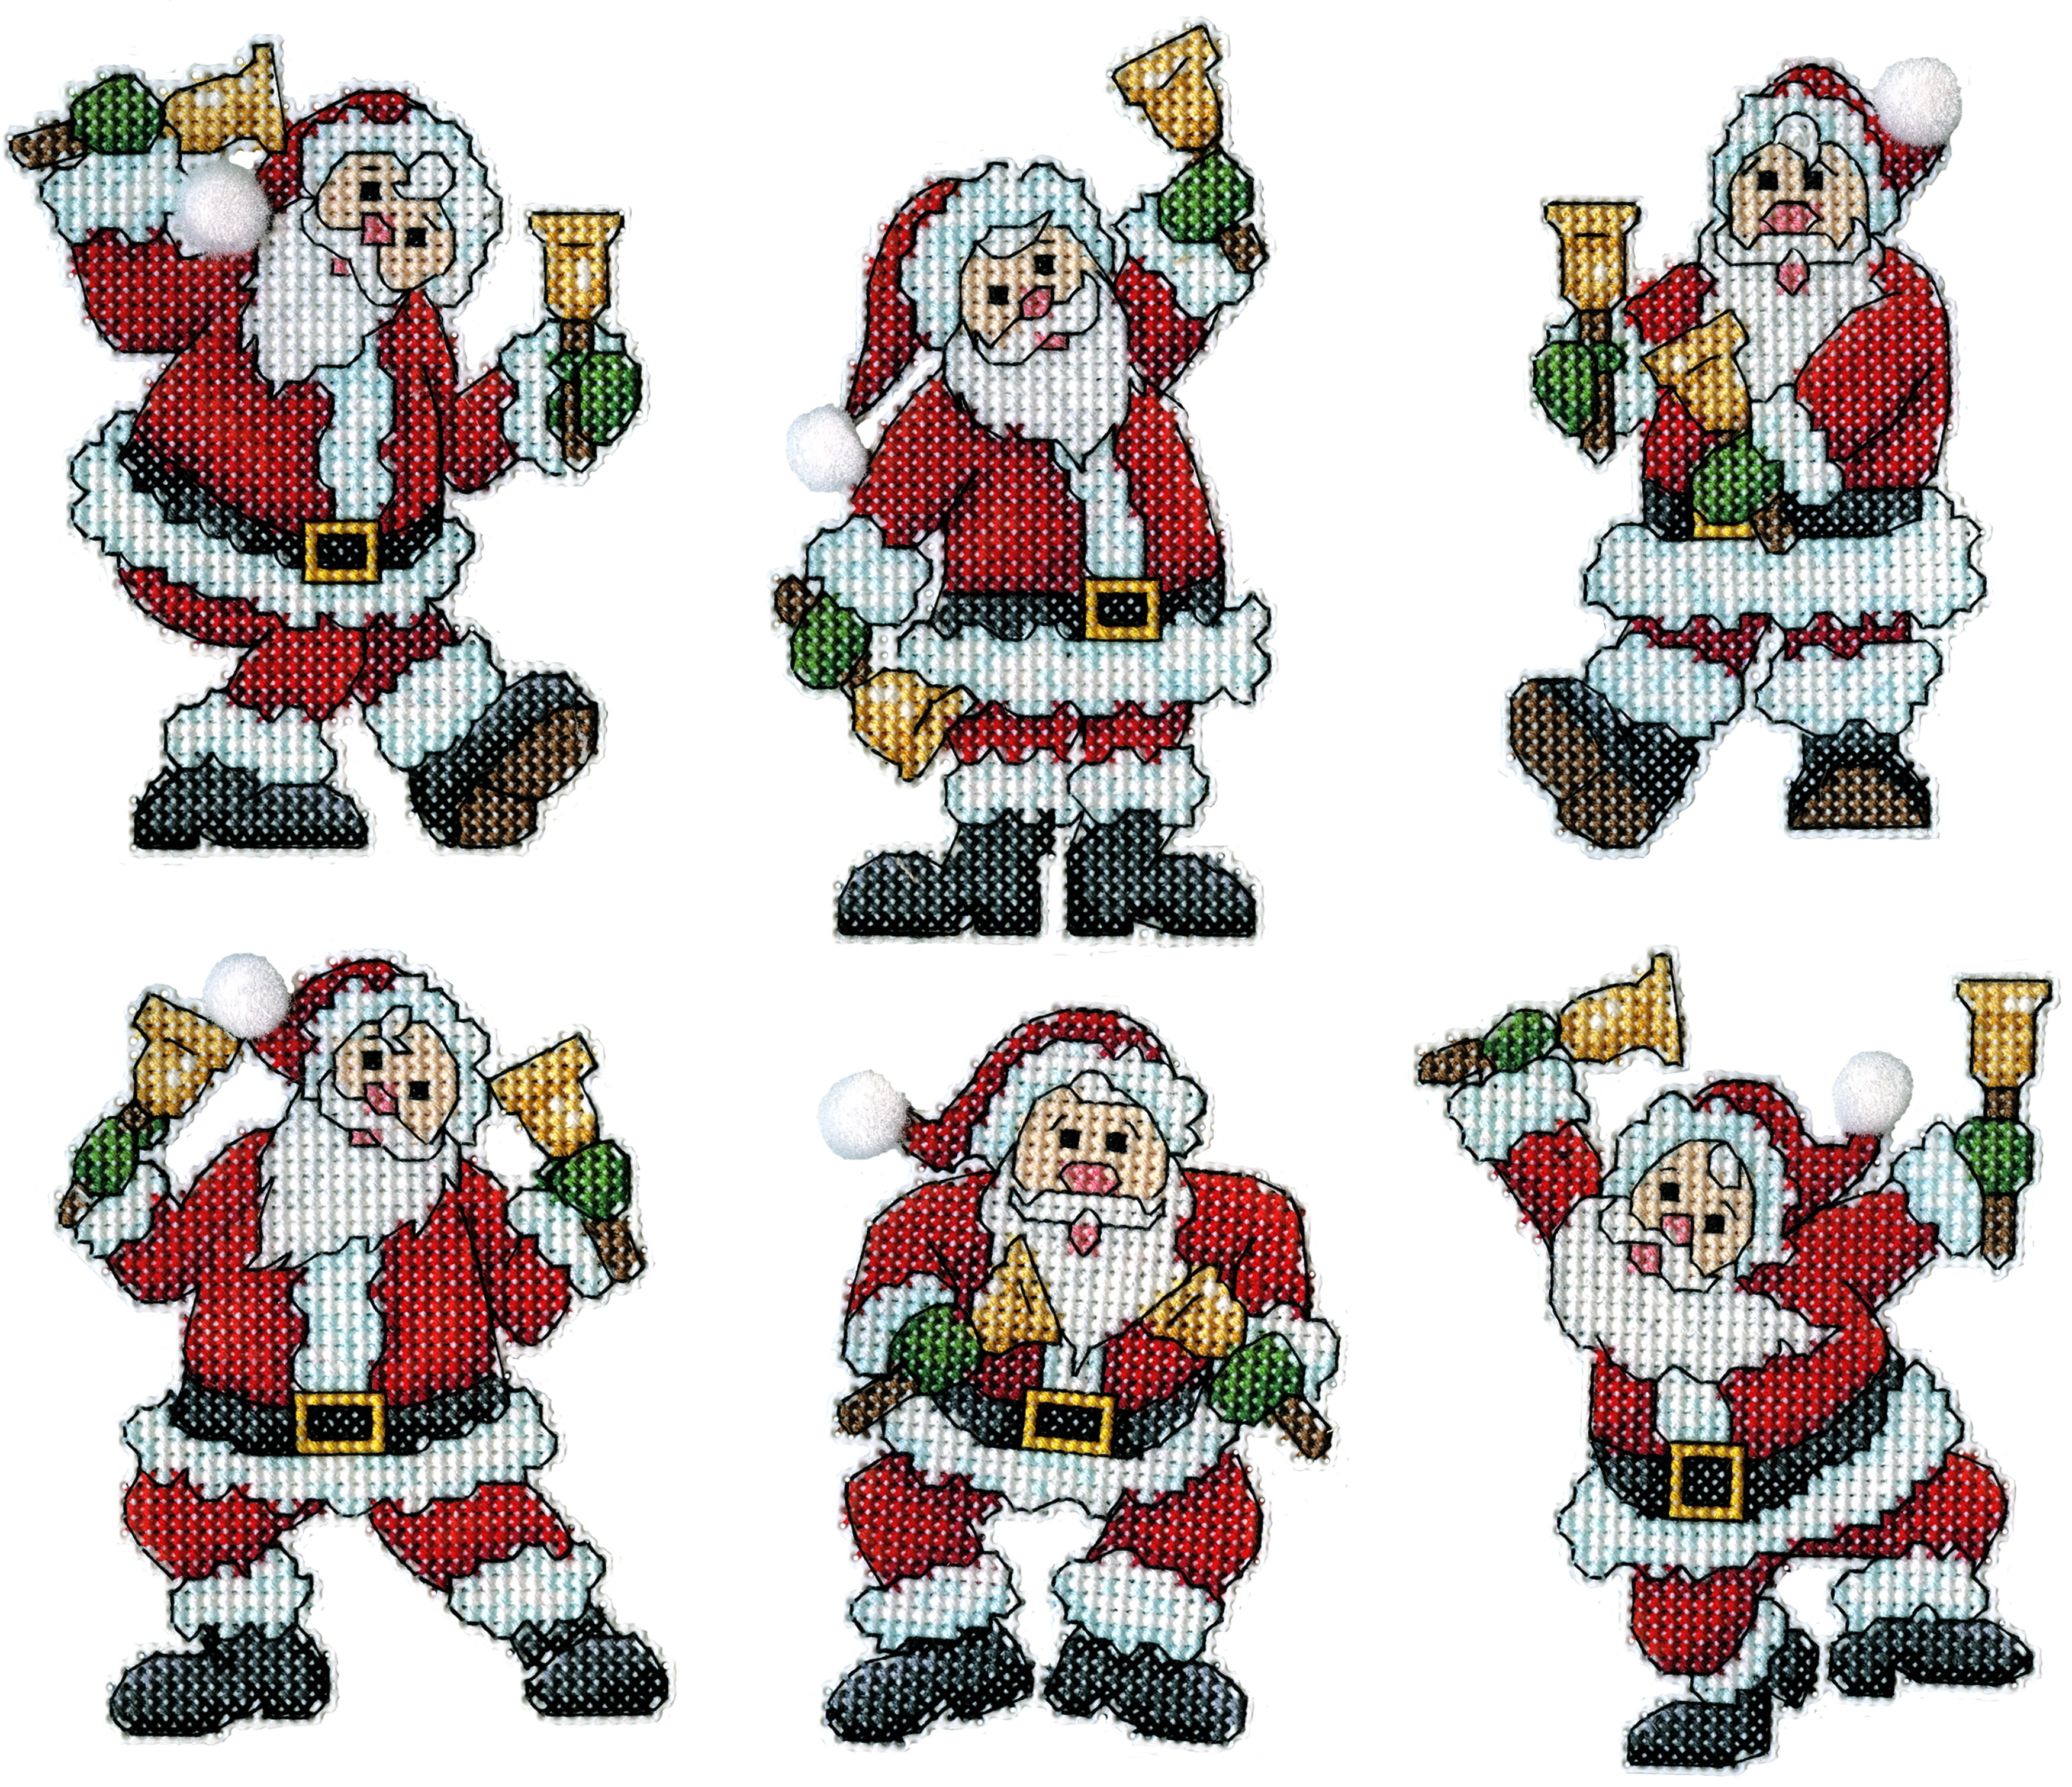 Design Works Christmas Fantasy Plastic Canvas Ornament Kit